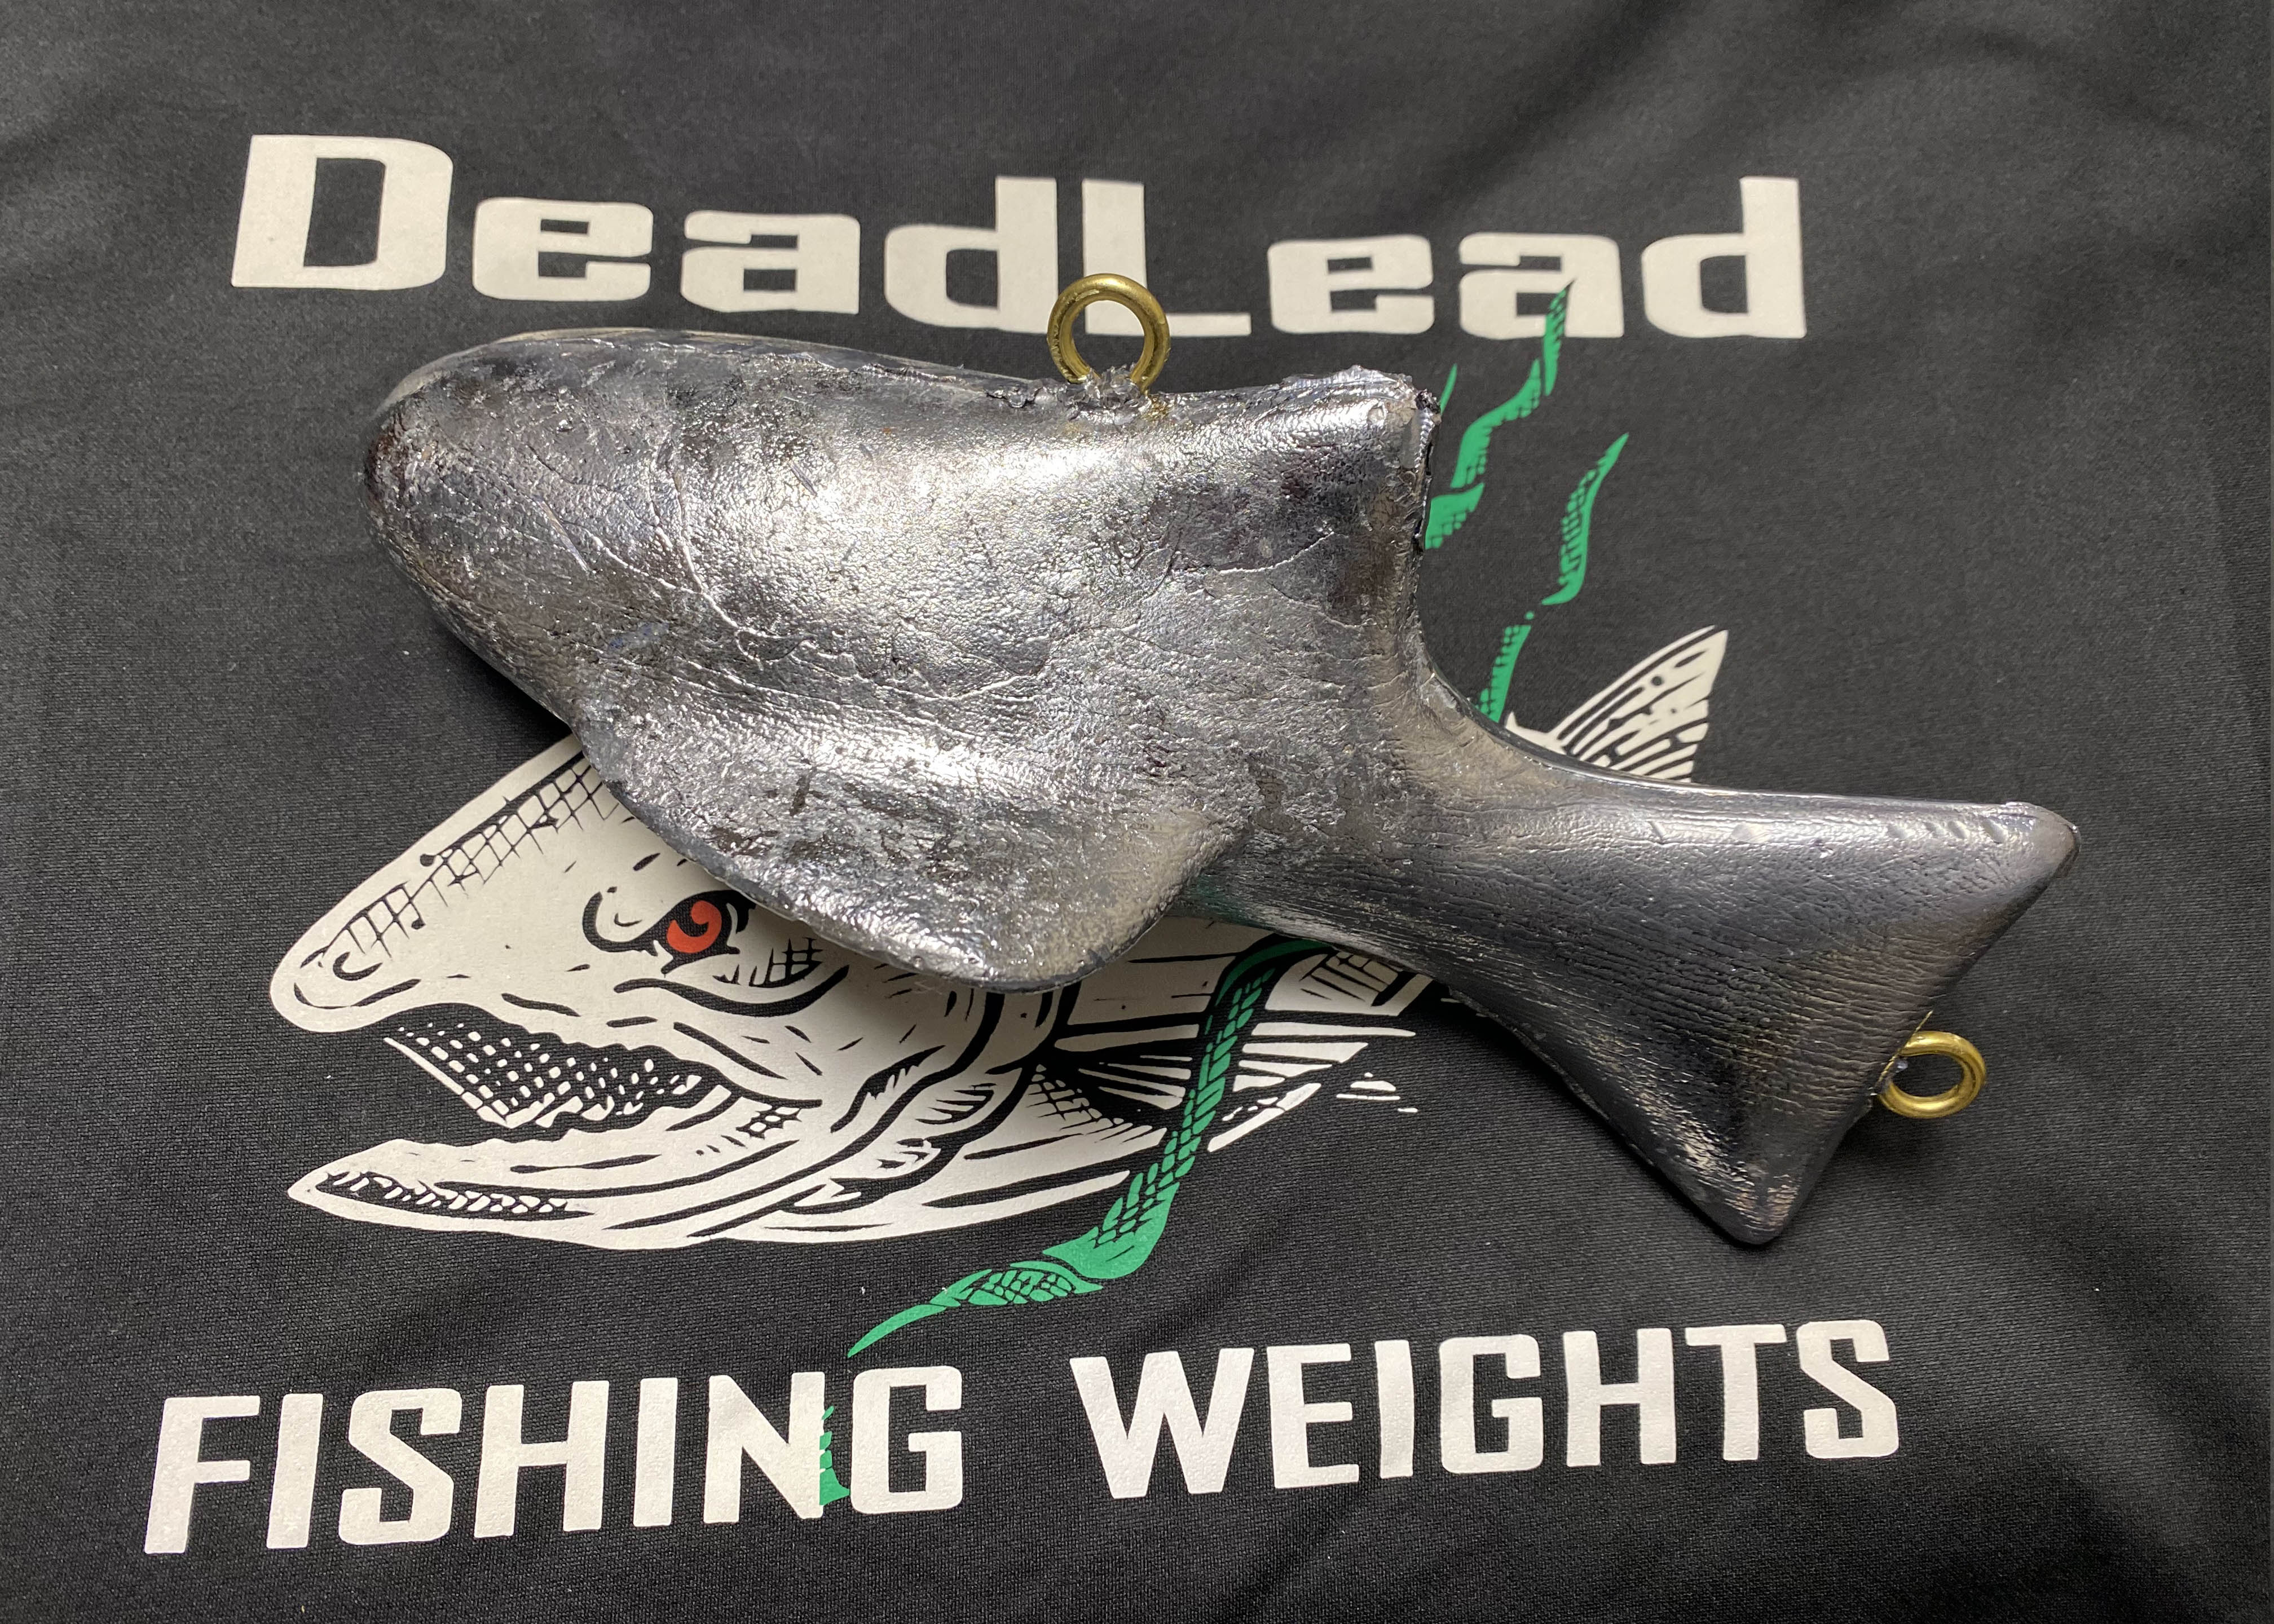 Lead Lead Lump With Swivel Fishing Weights High Quality Fishing